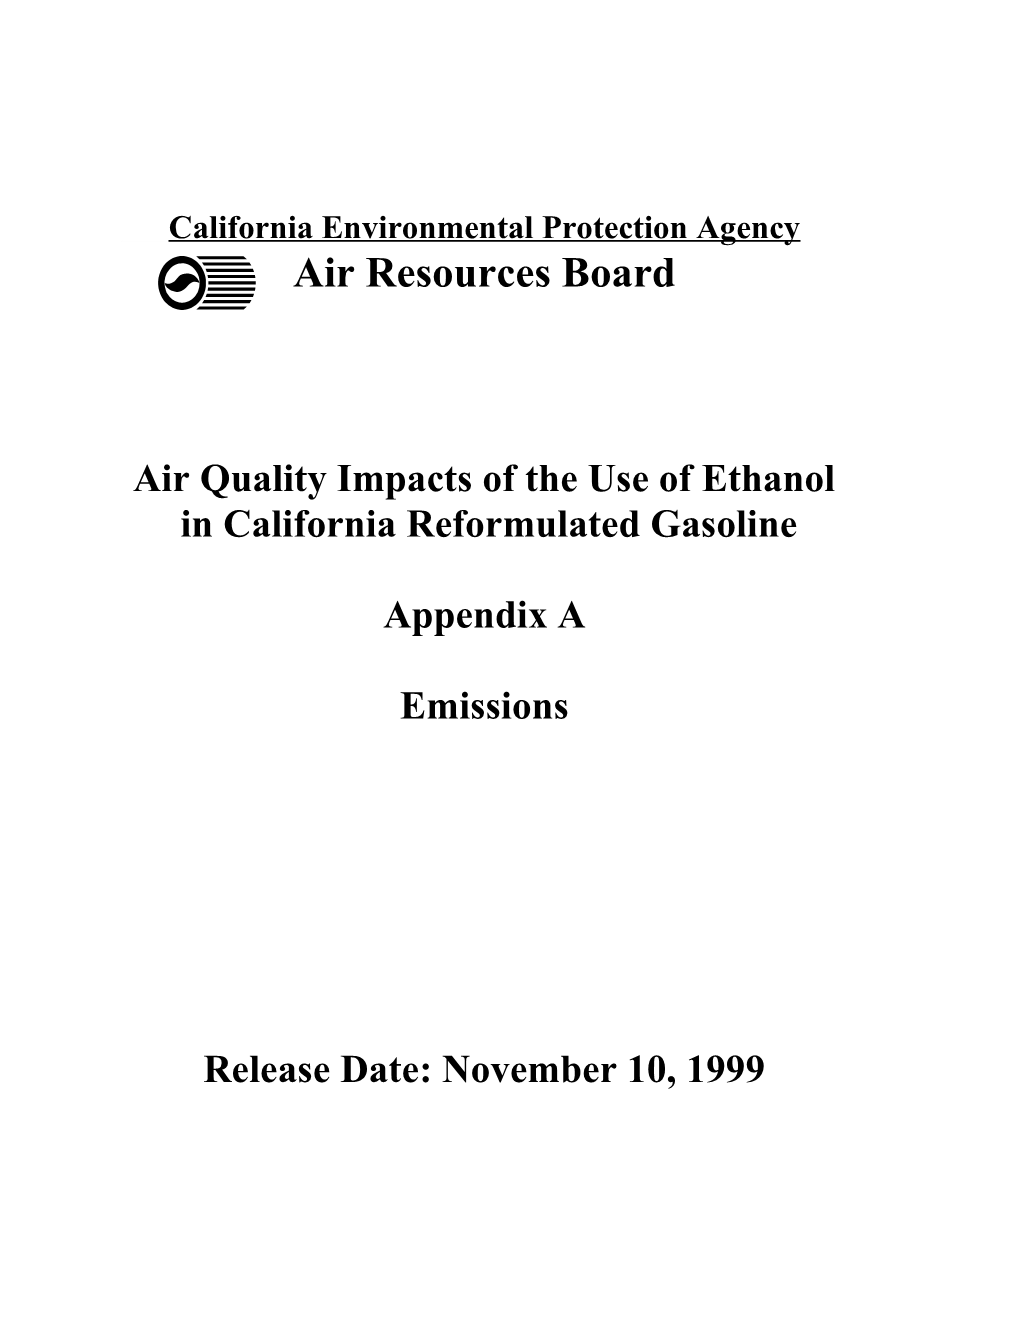 A-2. Development of Organic Gas Emission Profiles